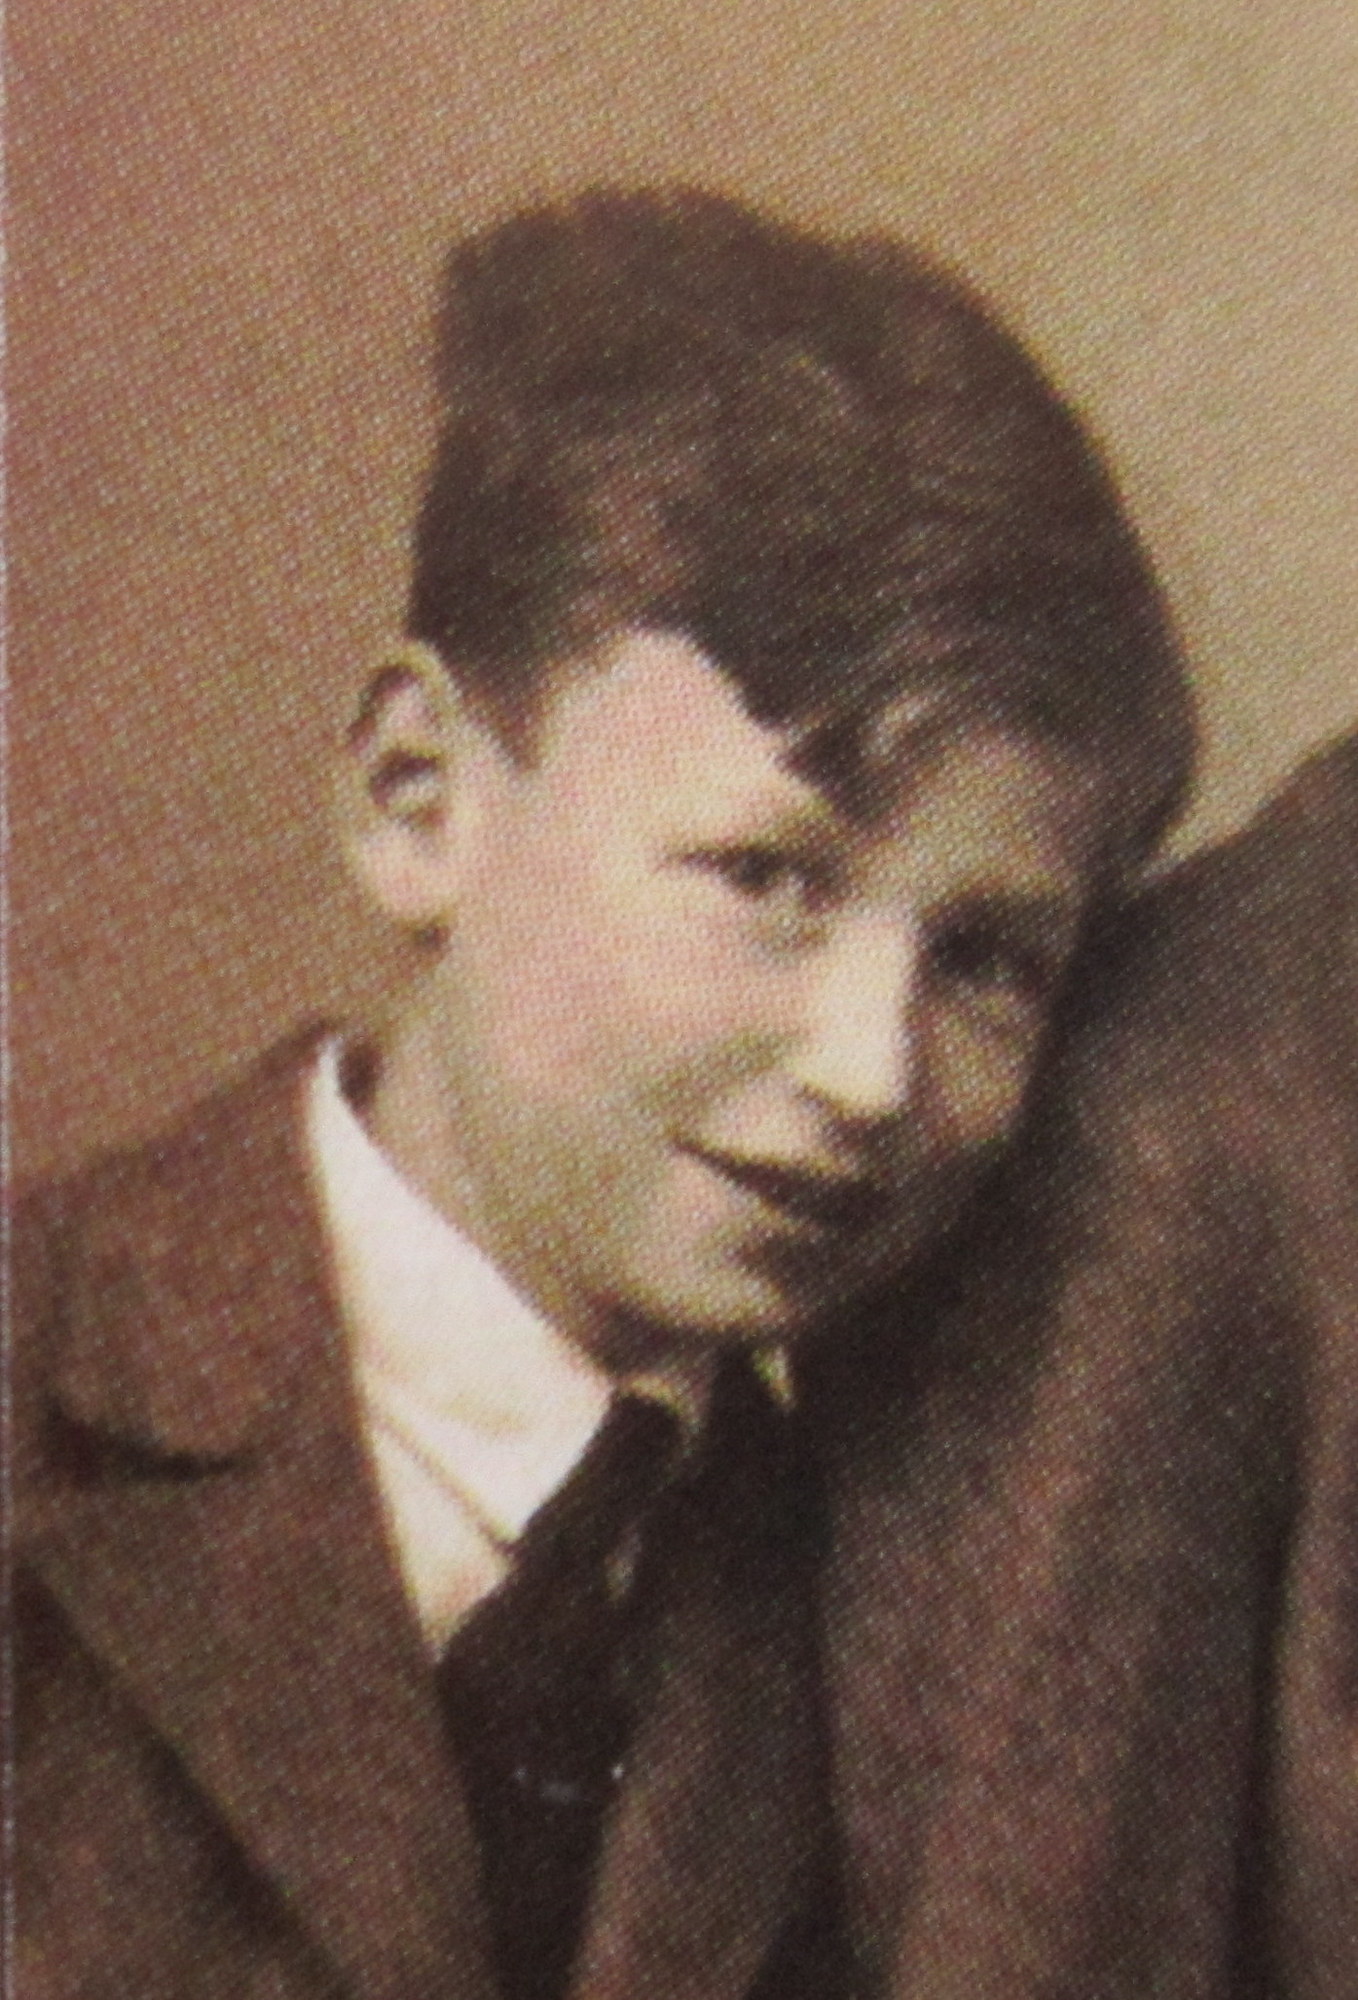 Richard Belcredi as a young boy